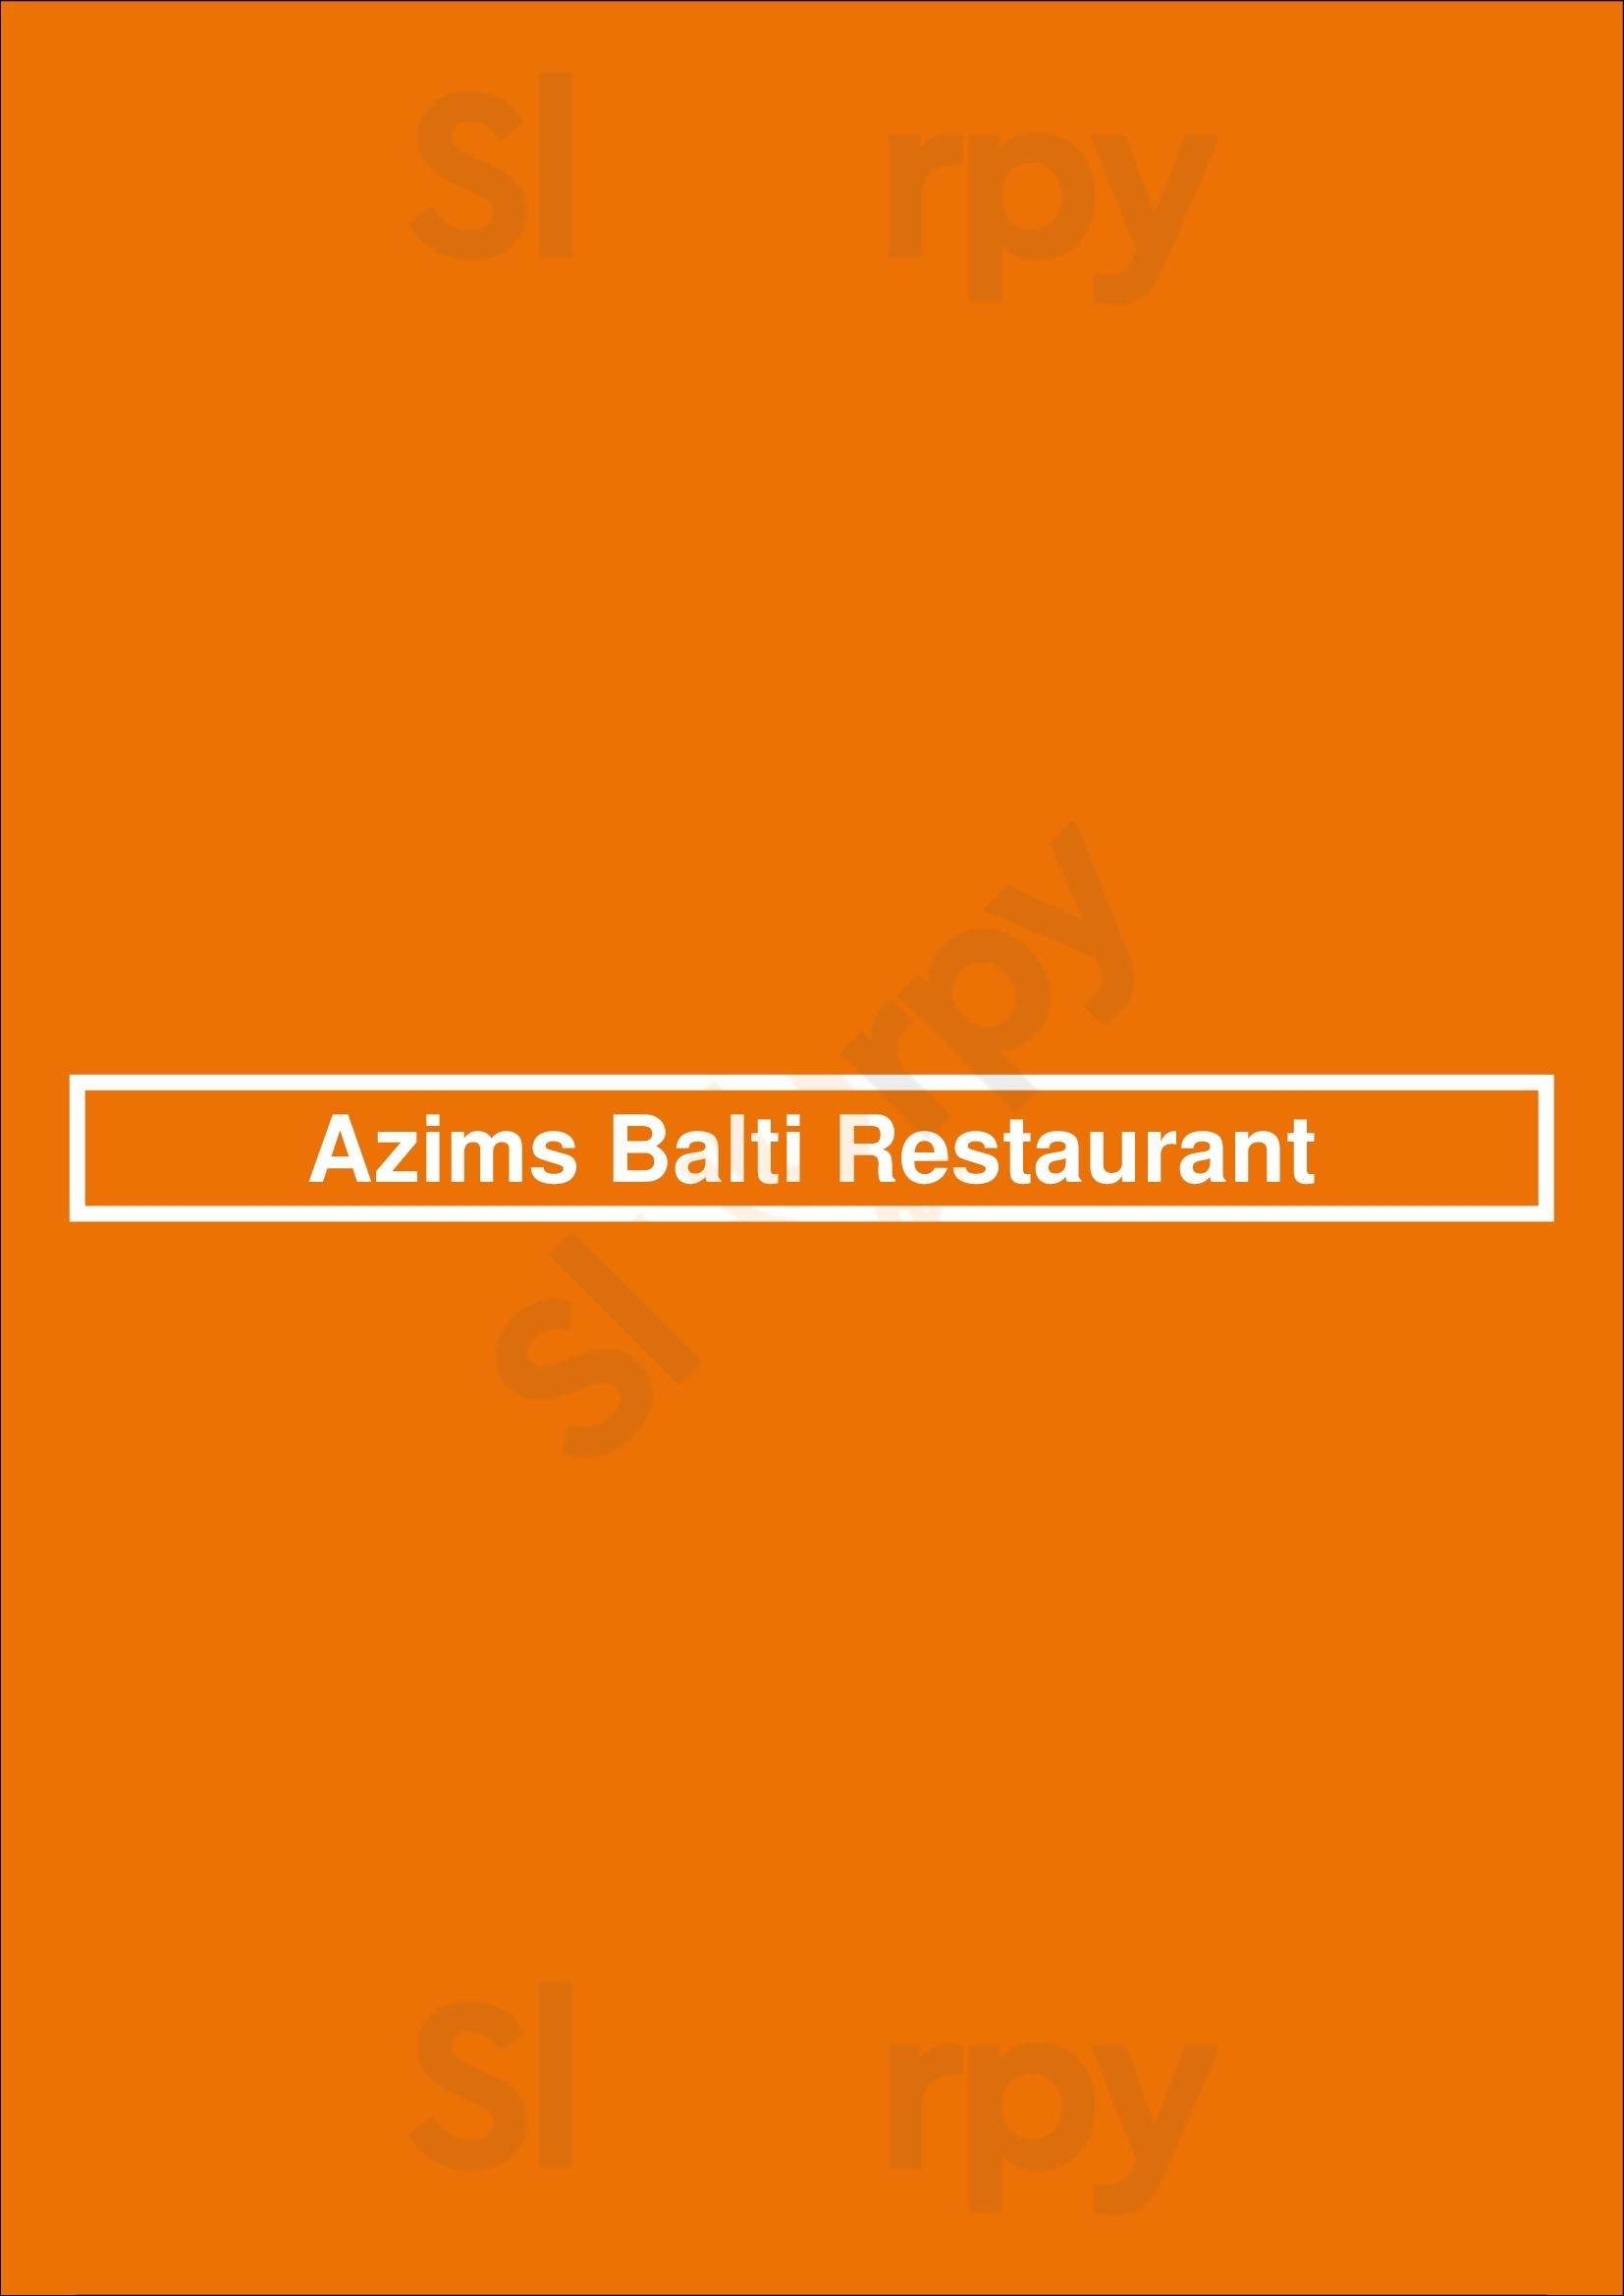 Azims Balti Restaurant Birmingham Menu - 1